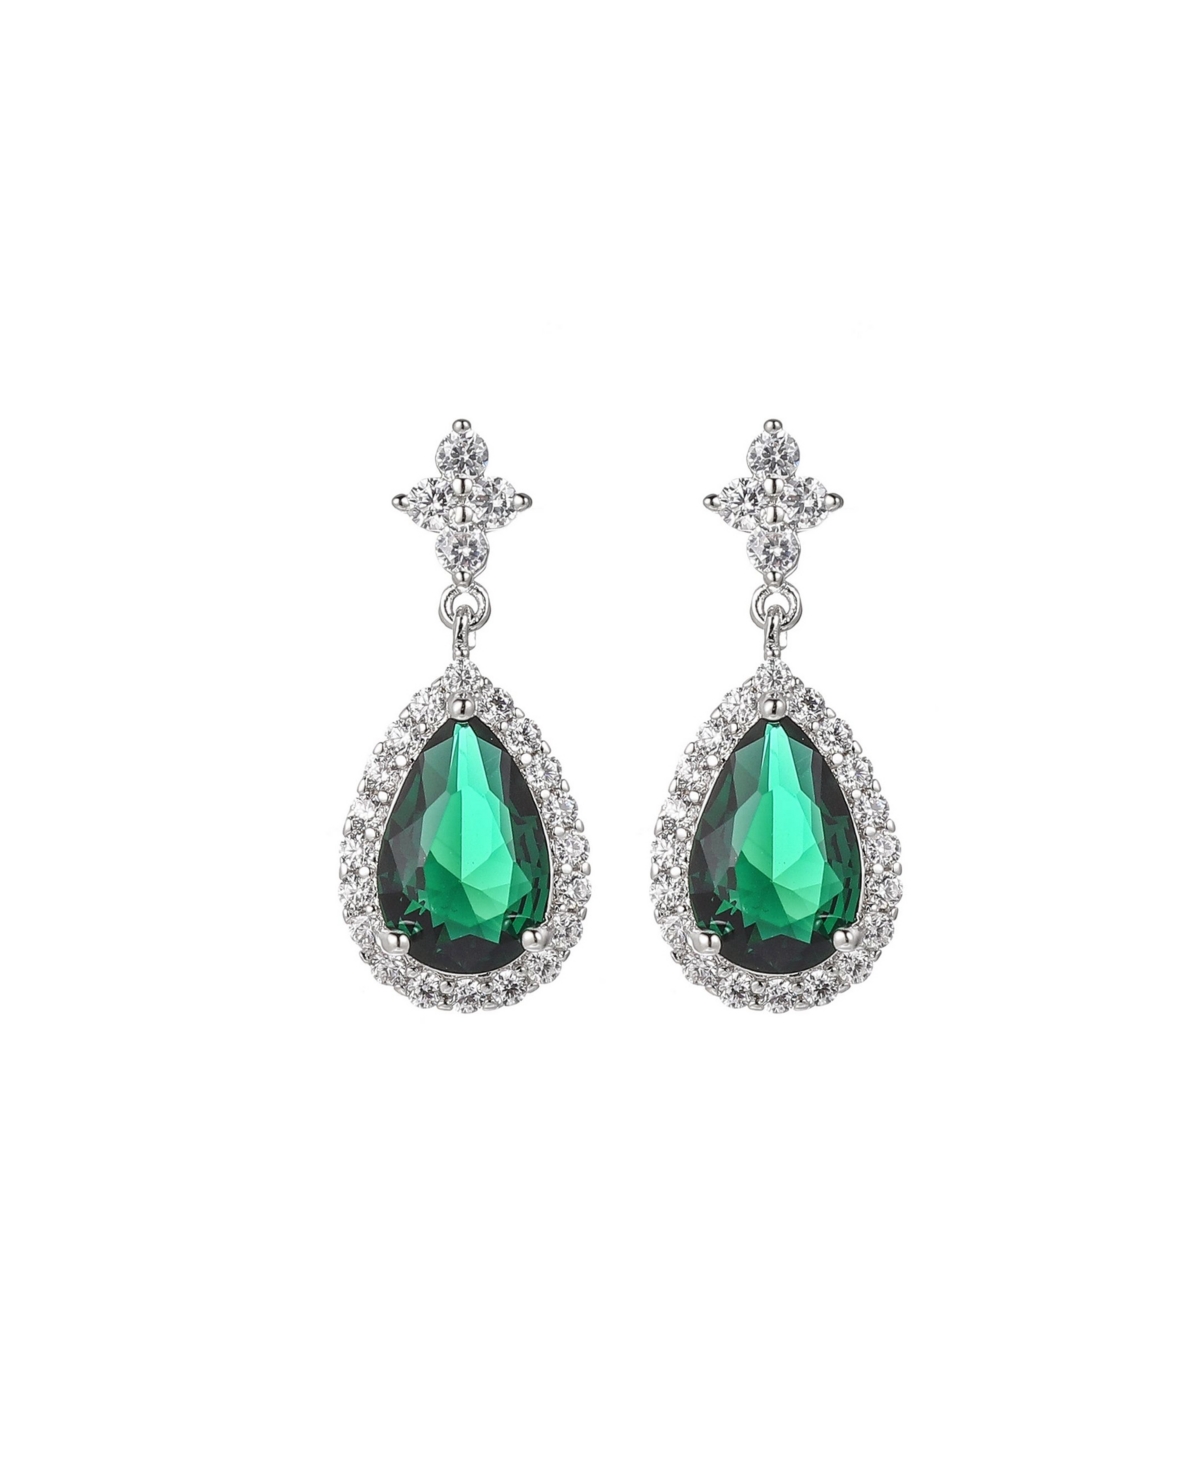 A & M Silver-Tone Emerald Accent Tear Drop Earrings